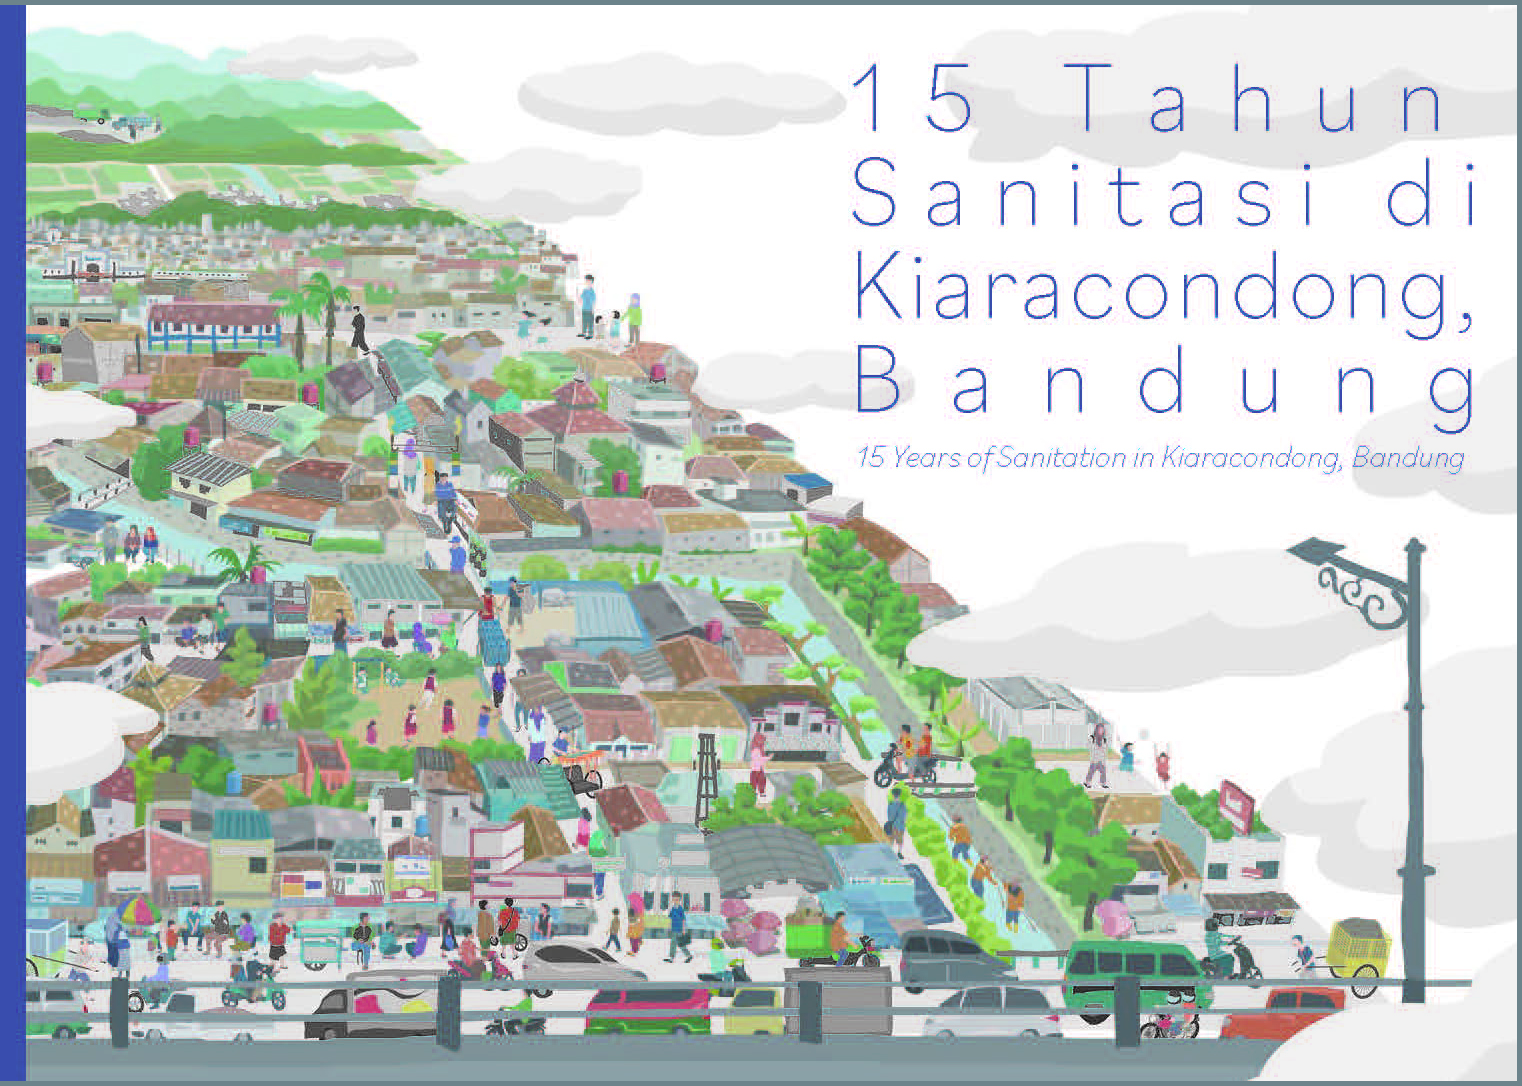 15 Tahun Sanitasi di Kiaracondong, Bandung (15 Years of Sanitation in Kiaracondong, Bandung)